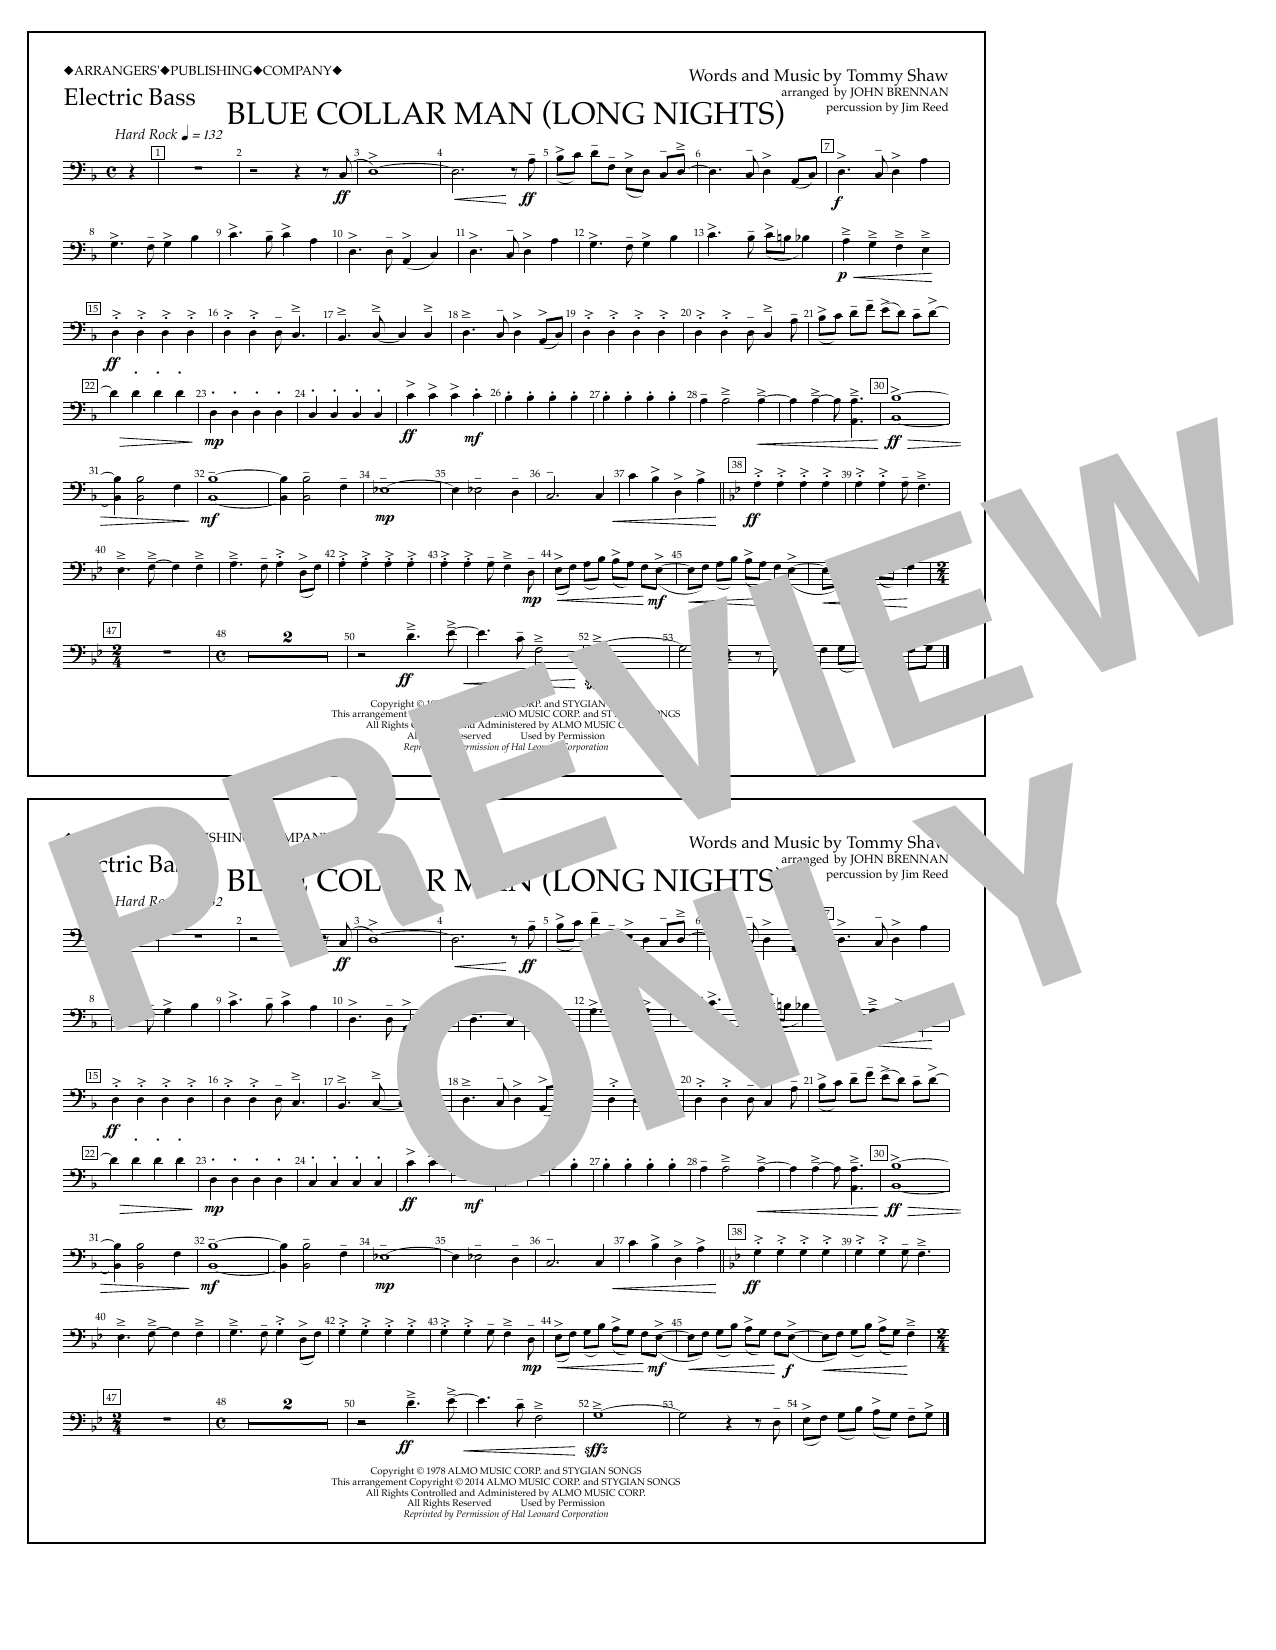 John Brennan Blue Collar Man (Long Nights) - Electric Bass Sheet Music Notes & Chords for Marching Band - Download or Print PDF